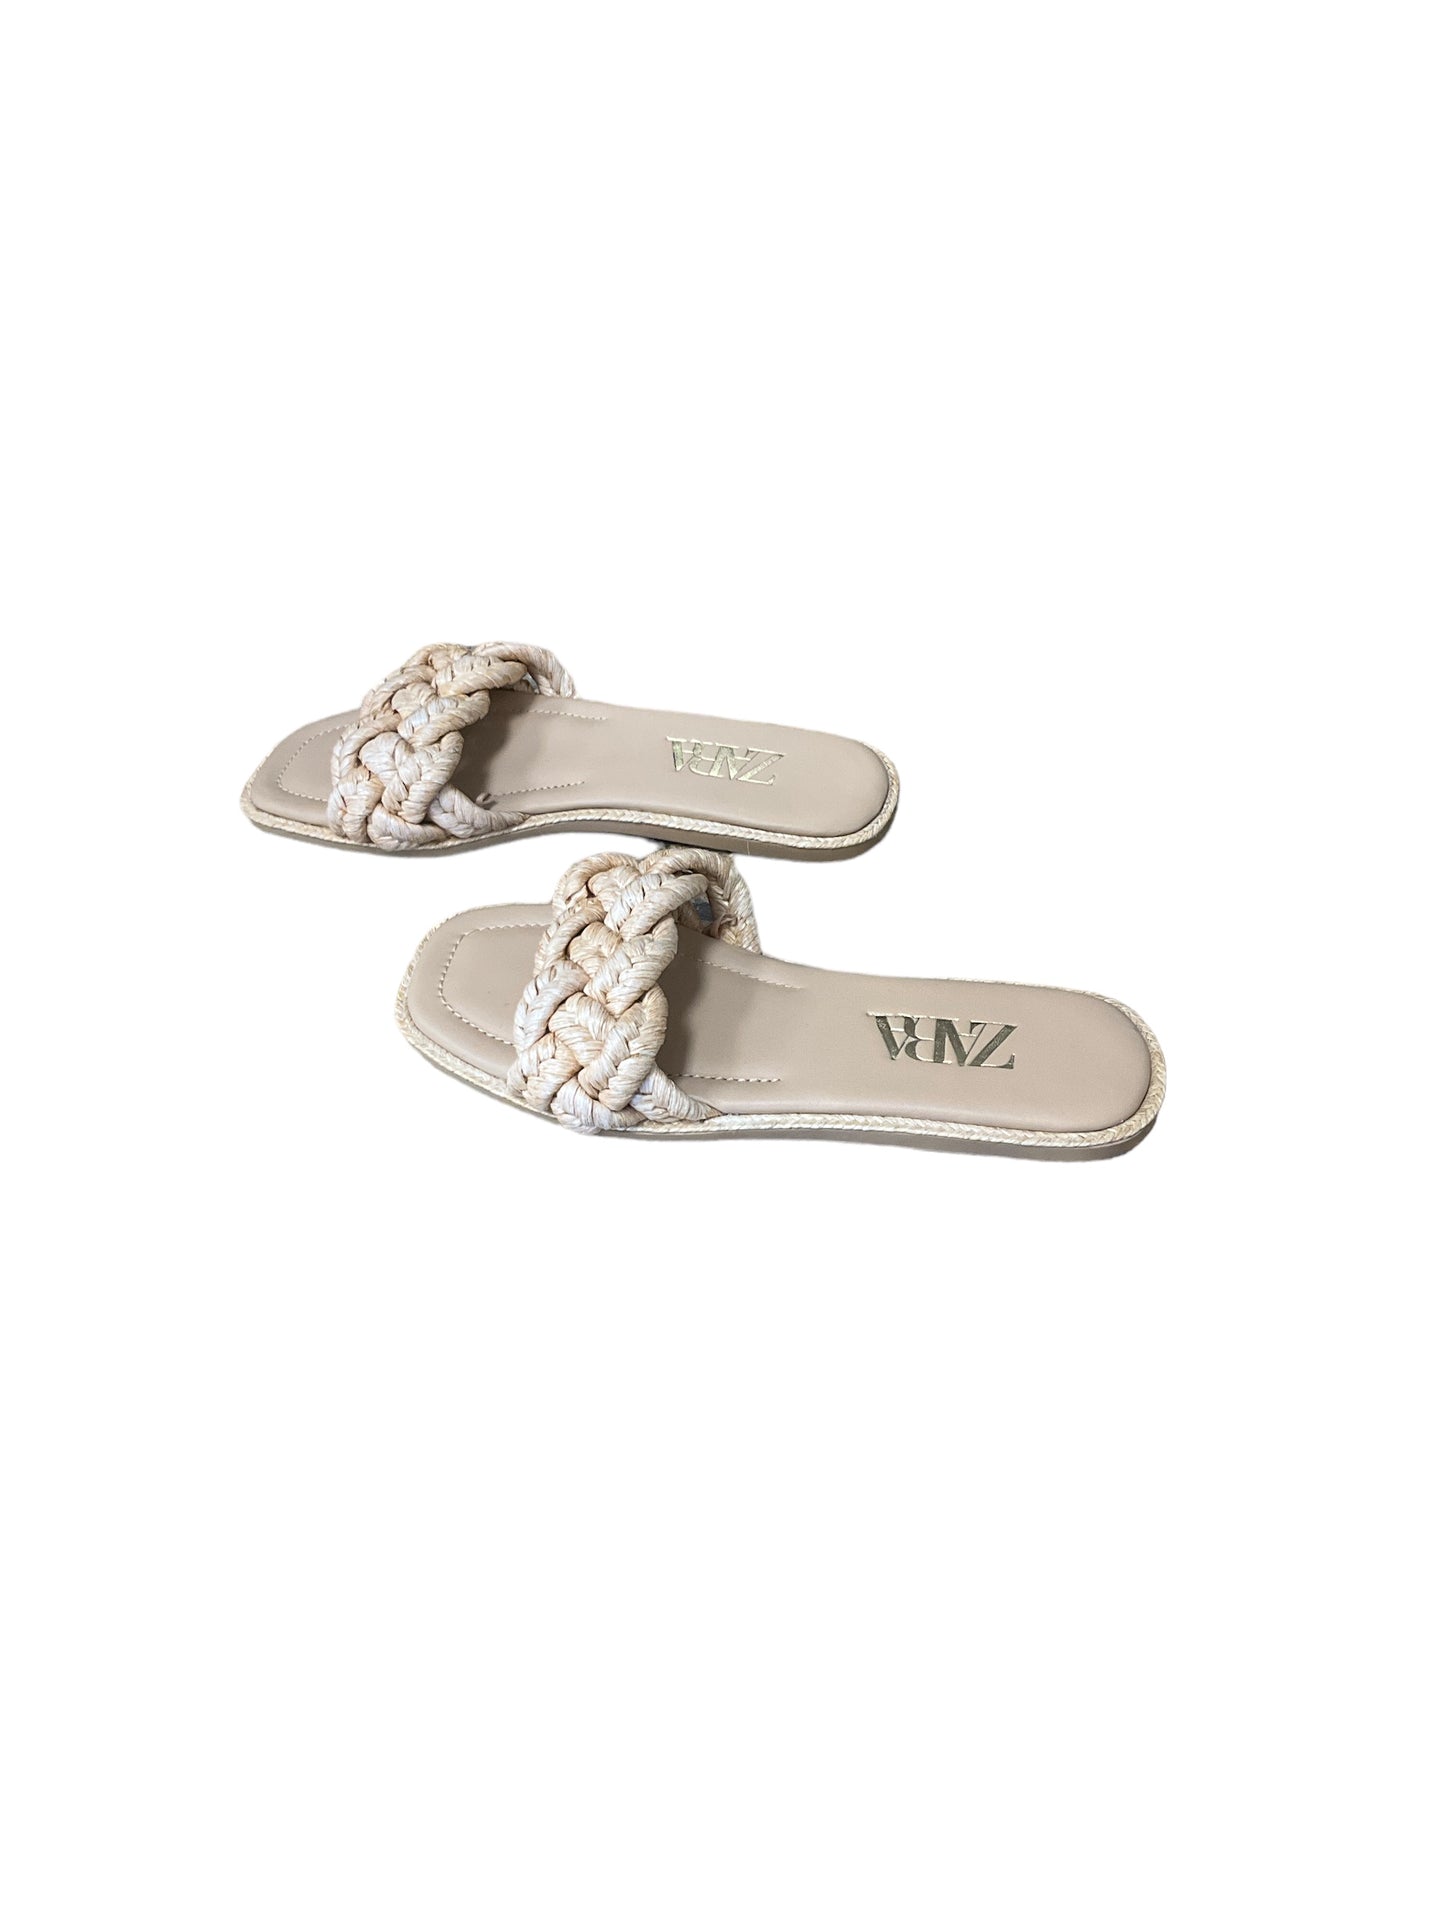 Sandals Flats By Zara  Size: 6